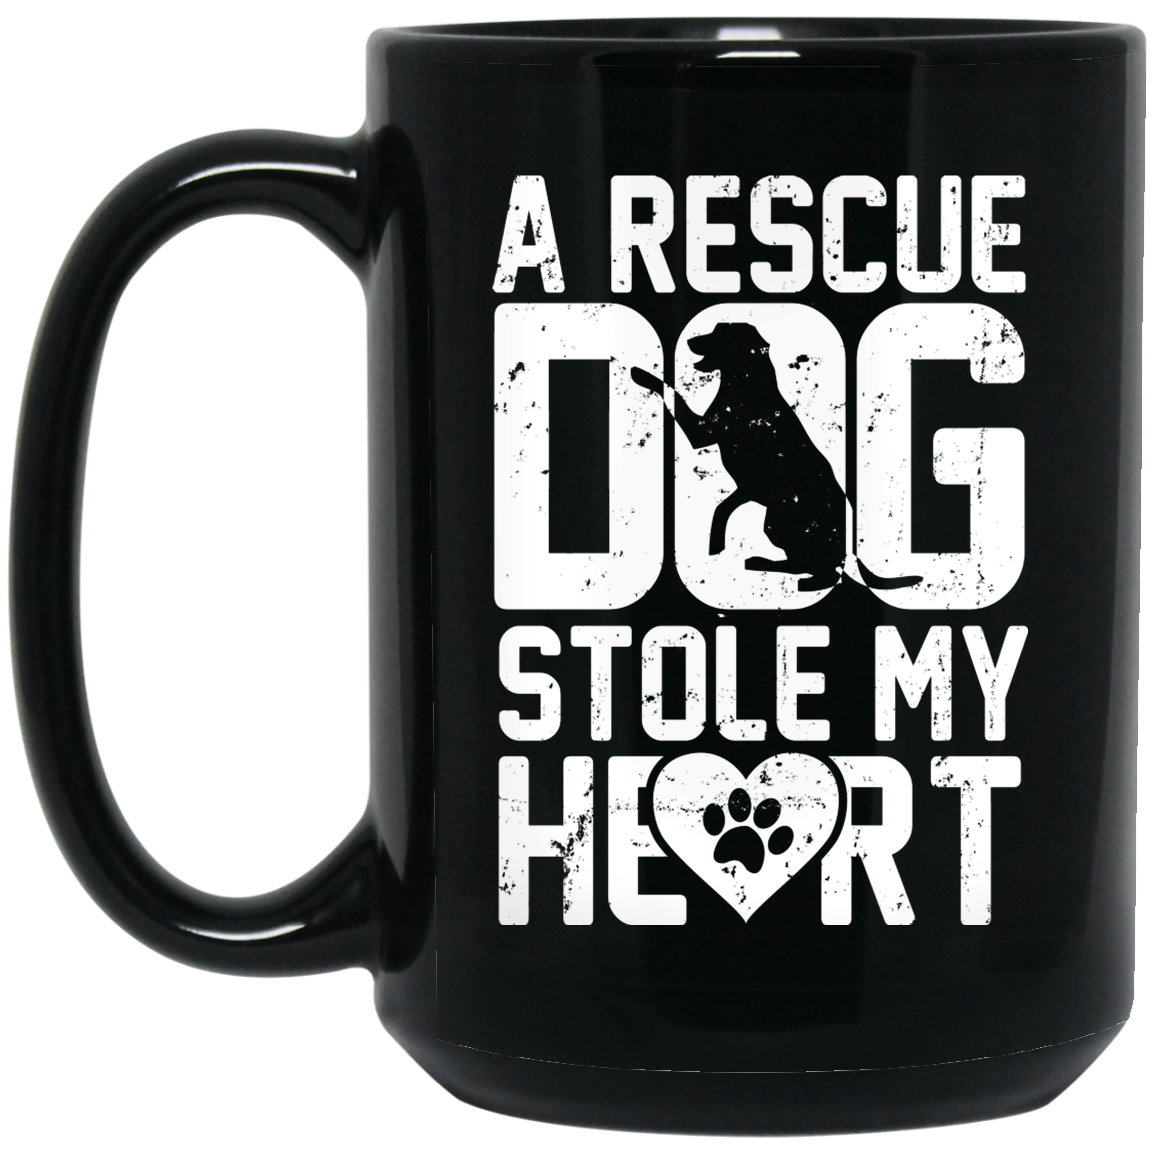 A Rescue Dog Stole my Heart - Black Mugs